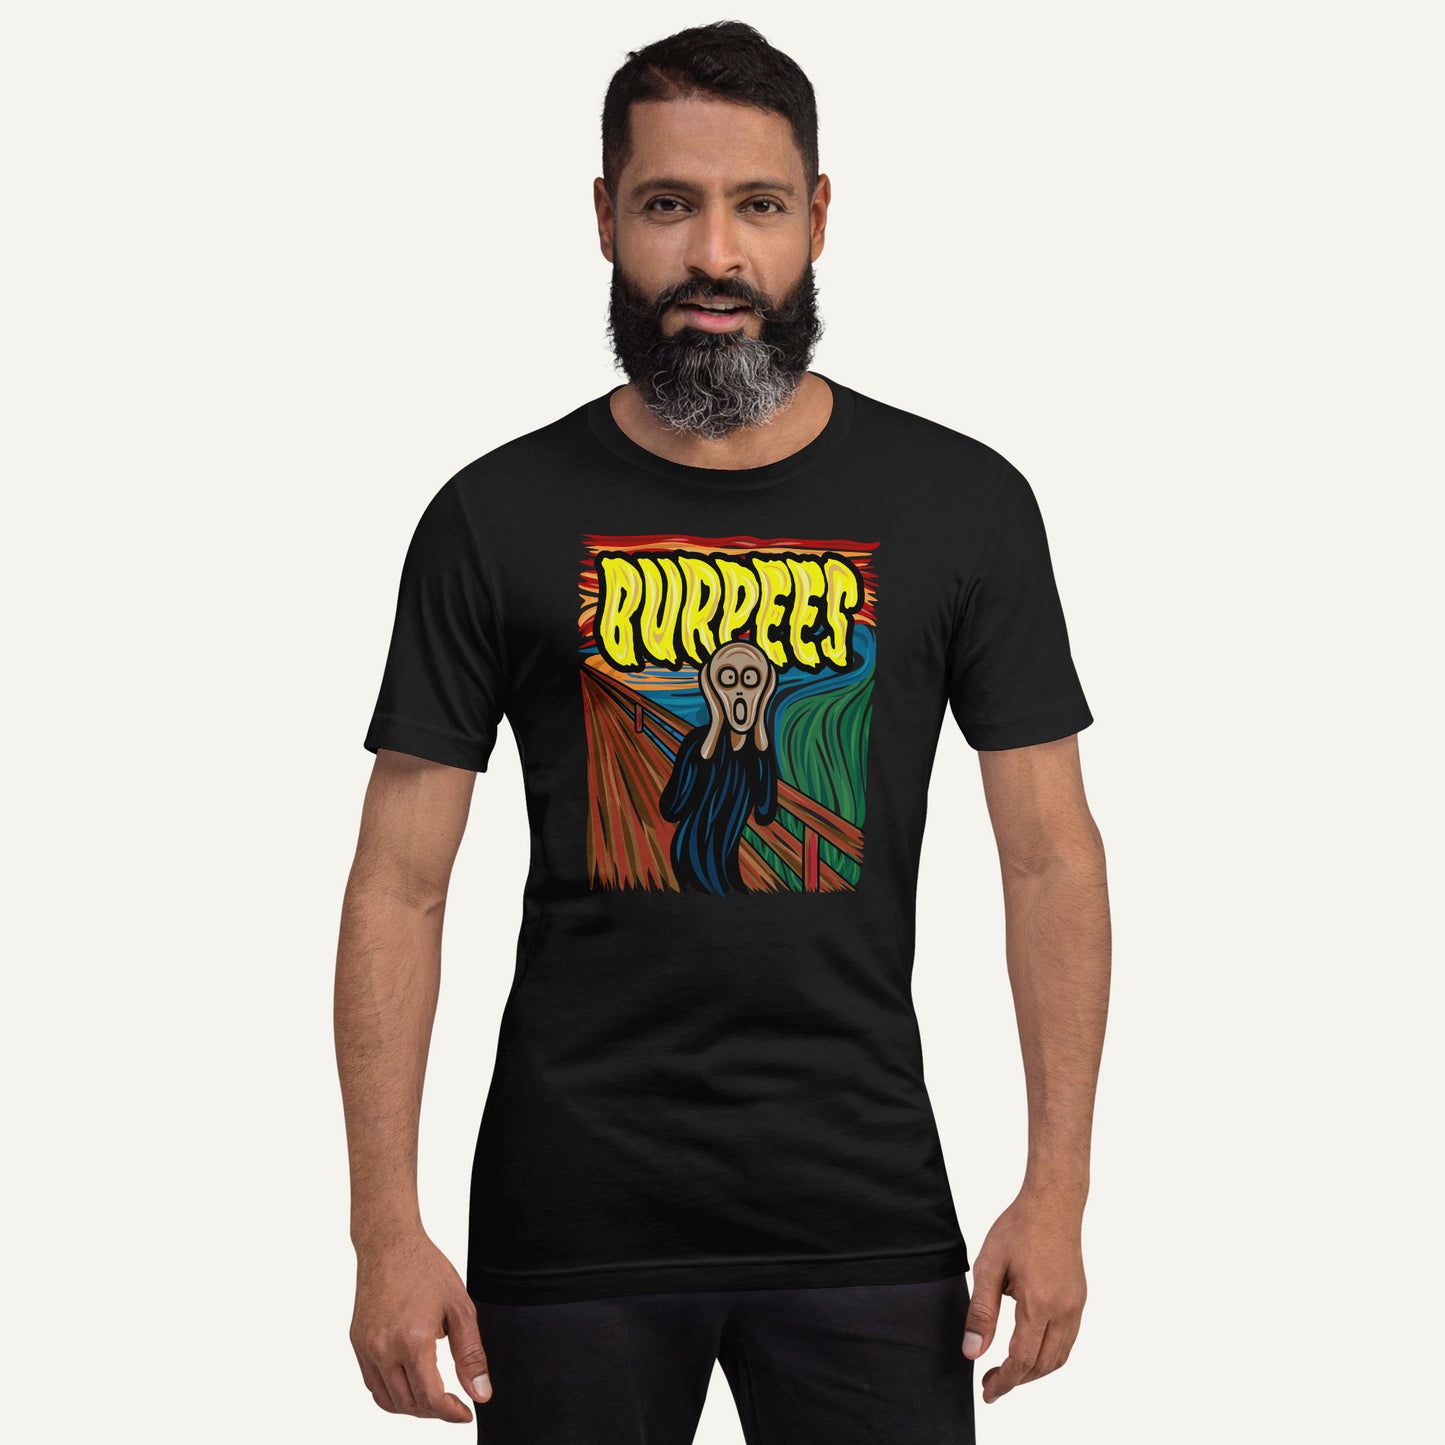 The Scream Burpees Men’s Standard T-Shirt